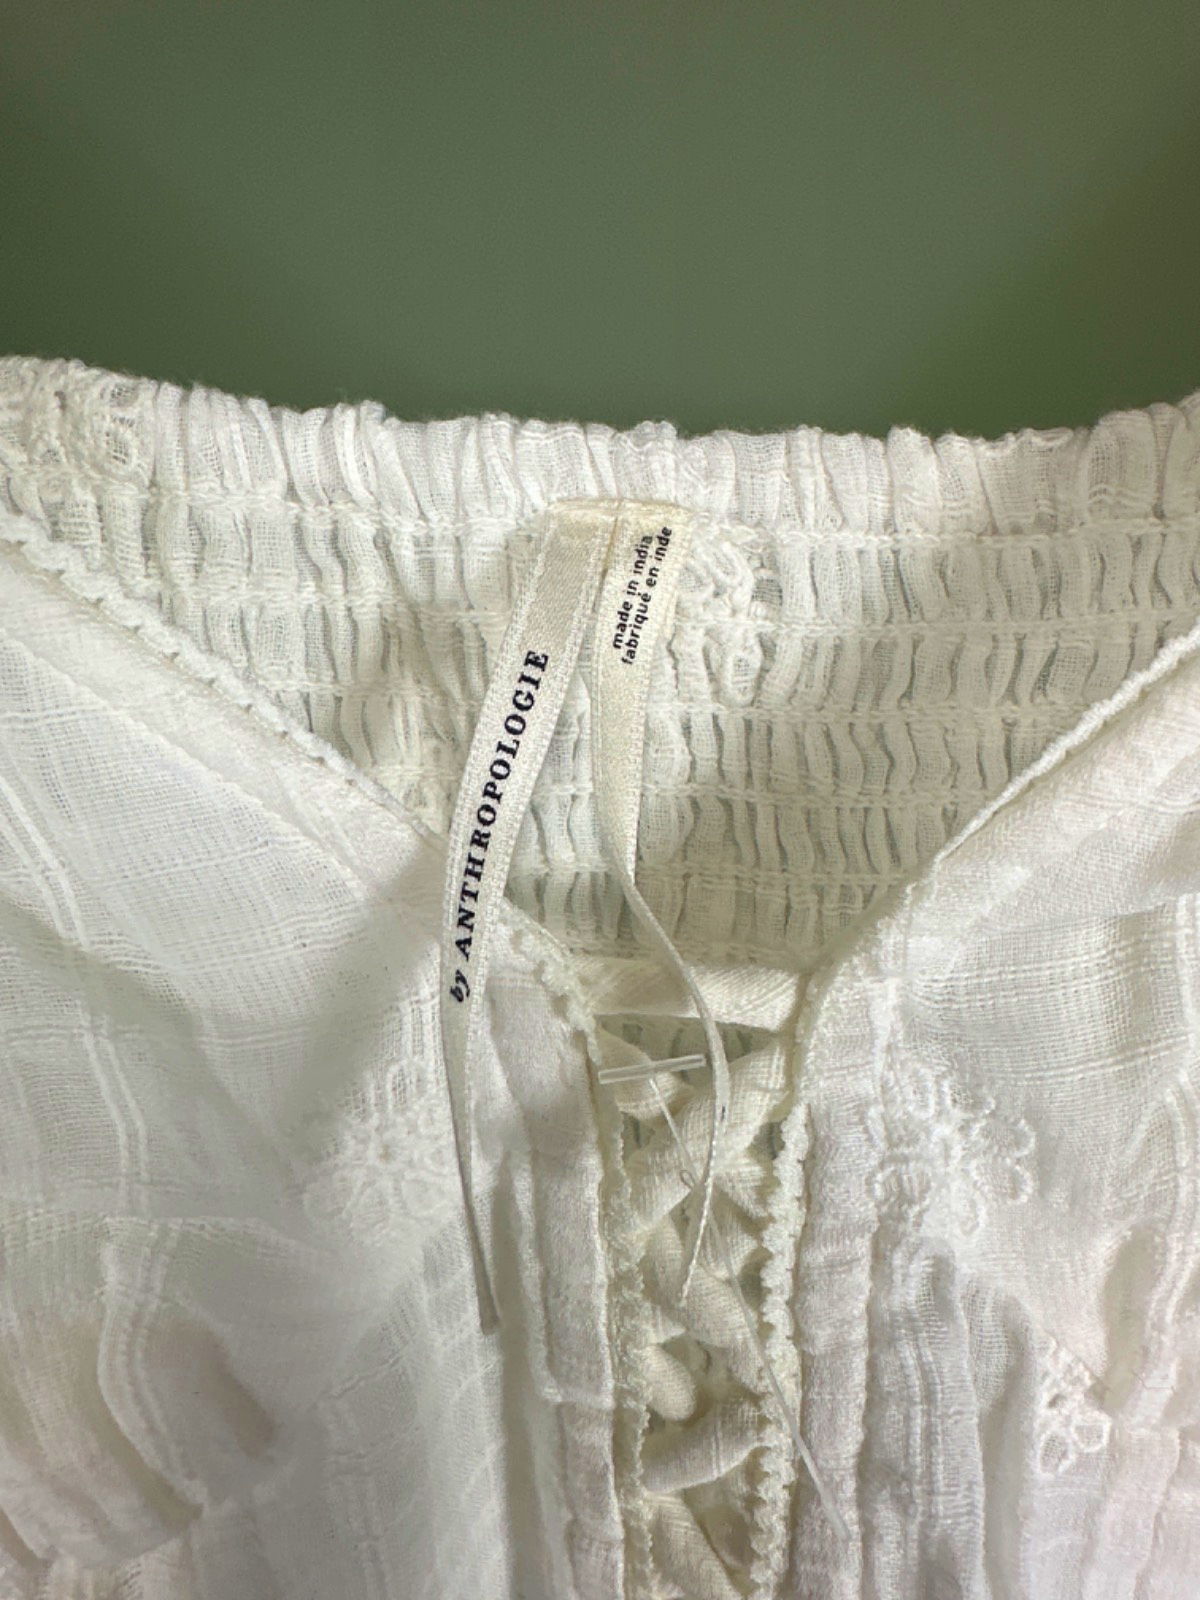 Anthropologie White Lace-Up Bodice Midi Dress Size M